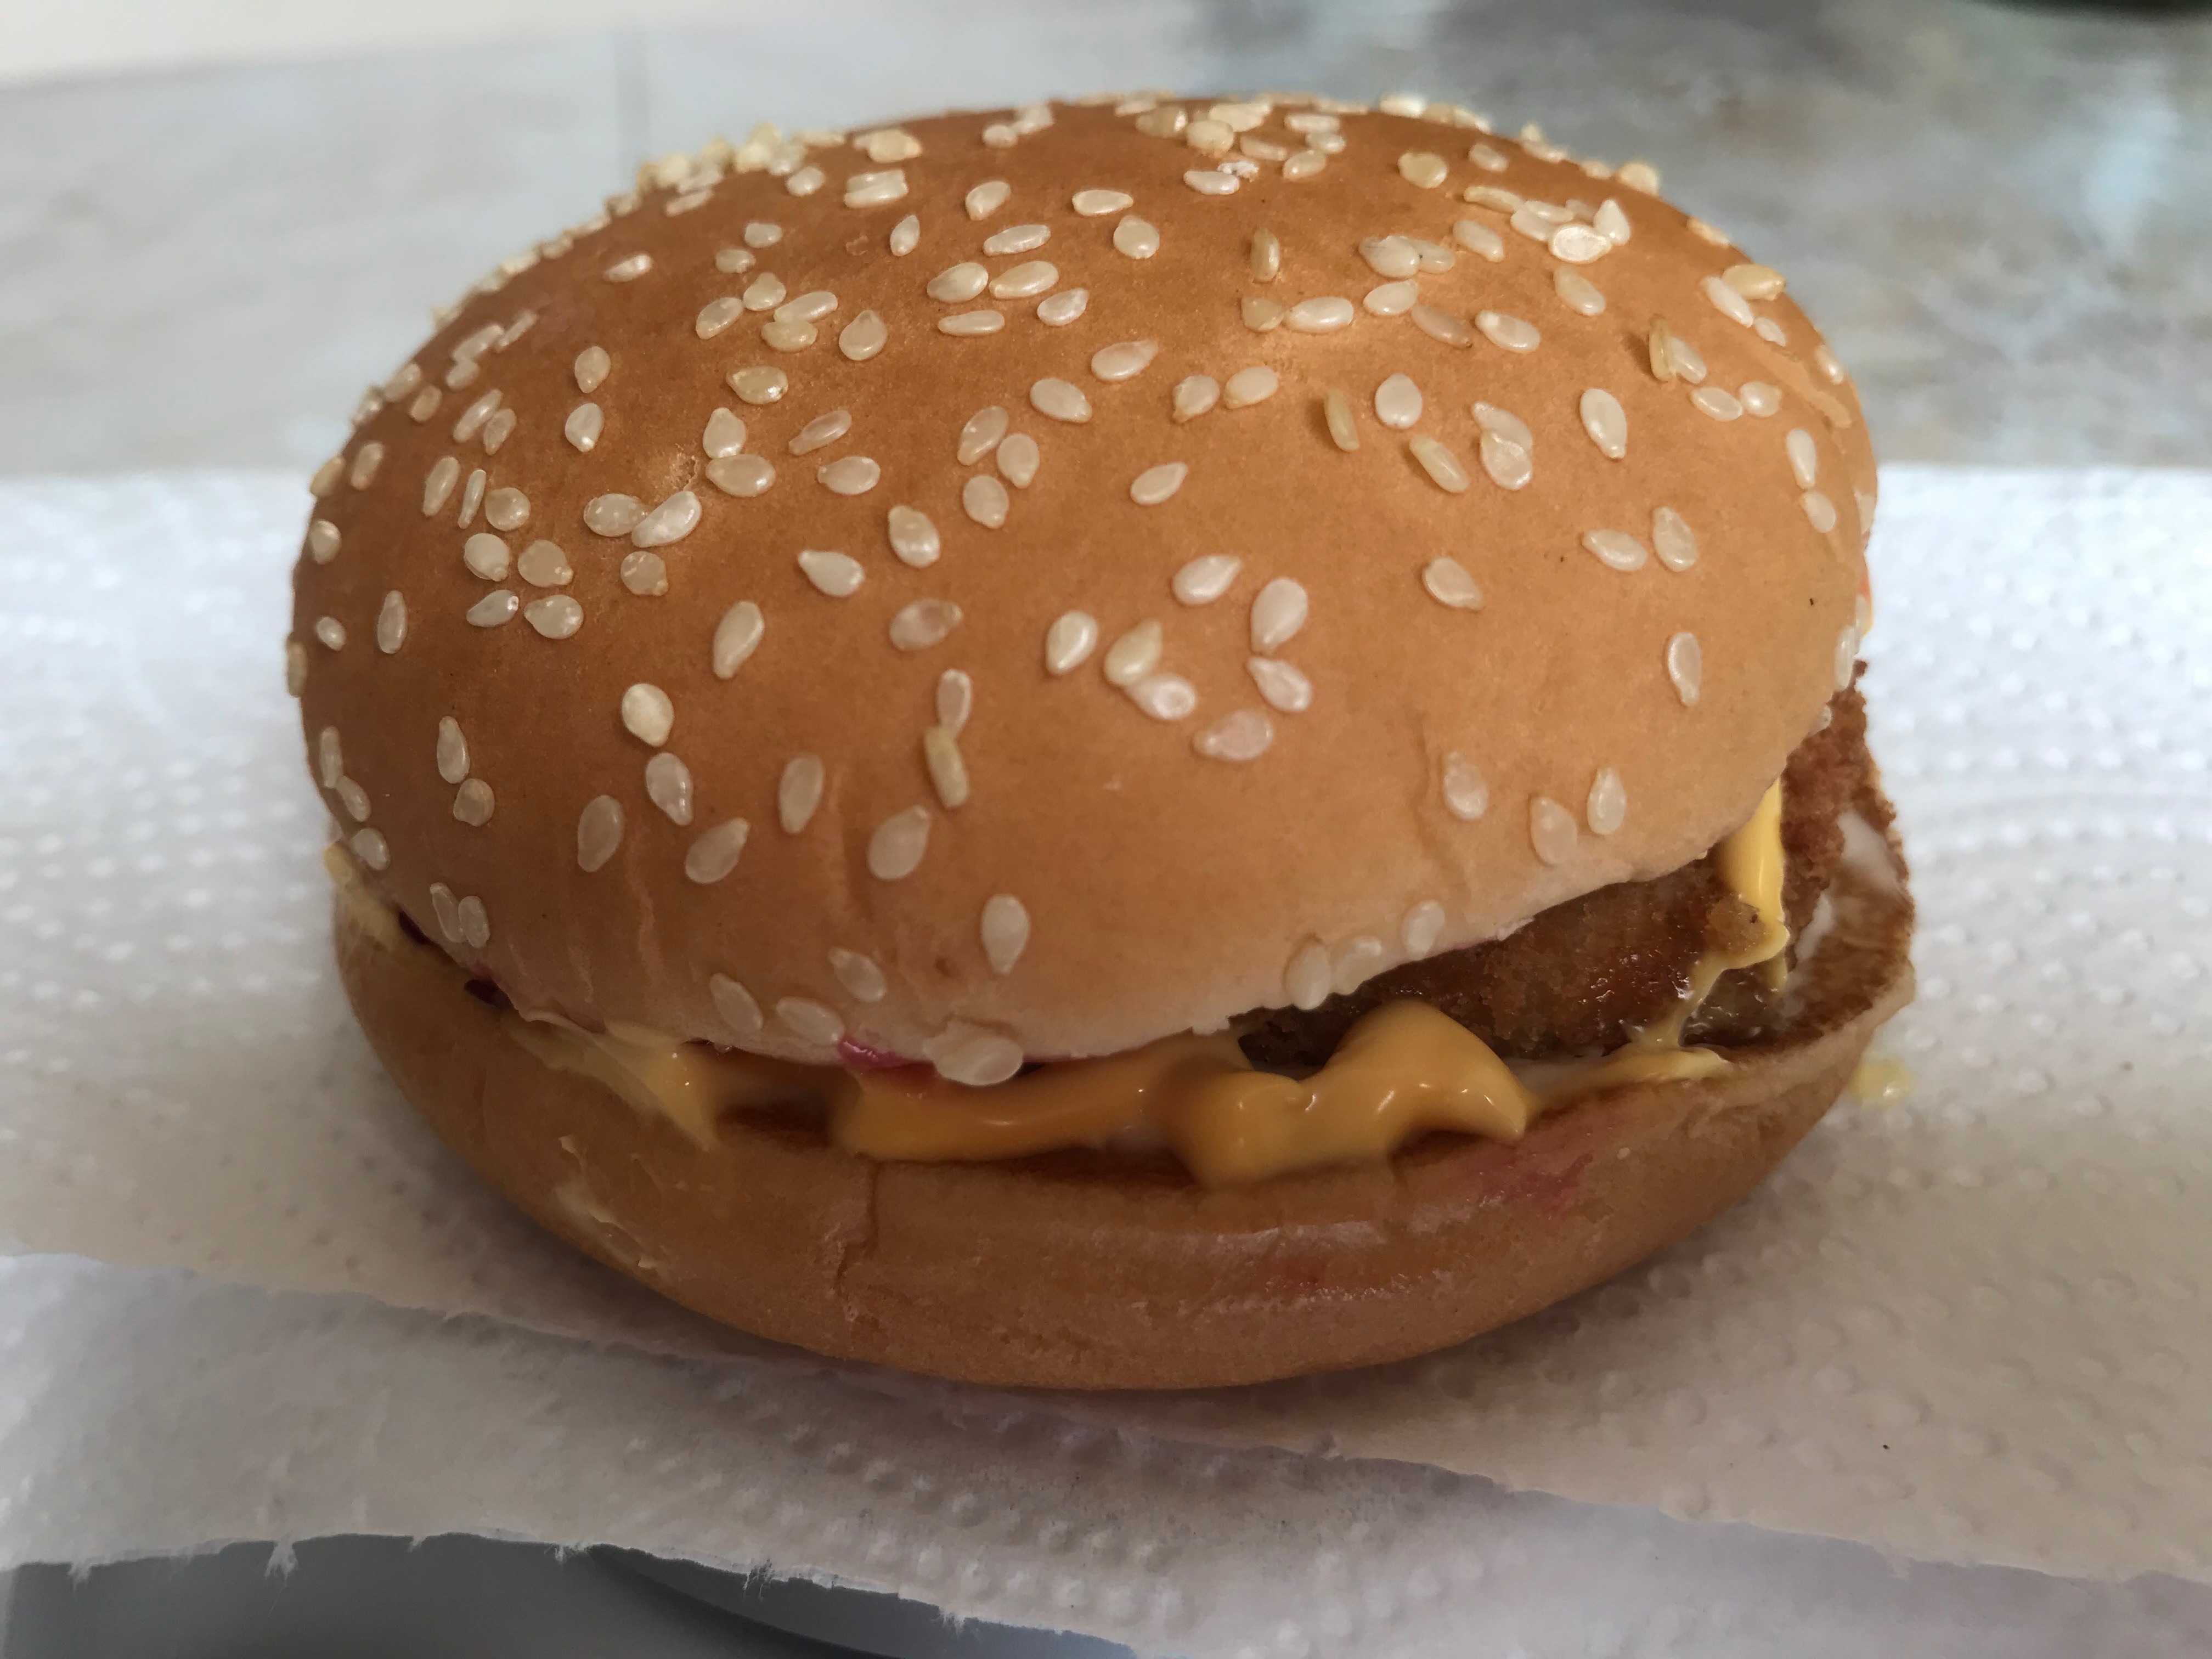 Cuanto cuesta una hamburguesa de burger king